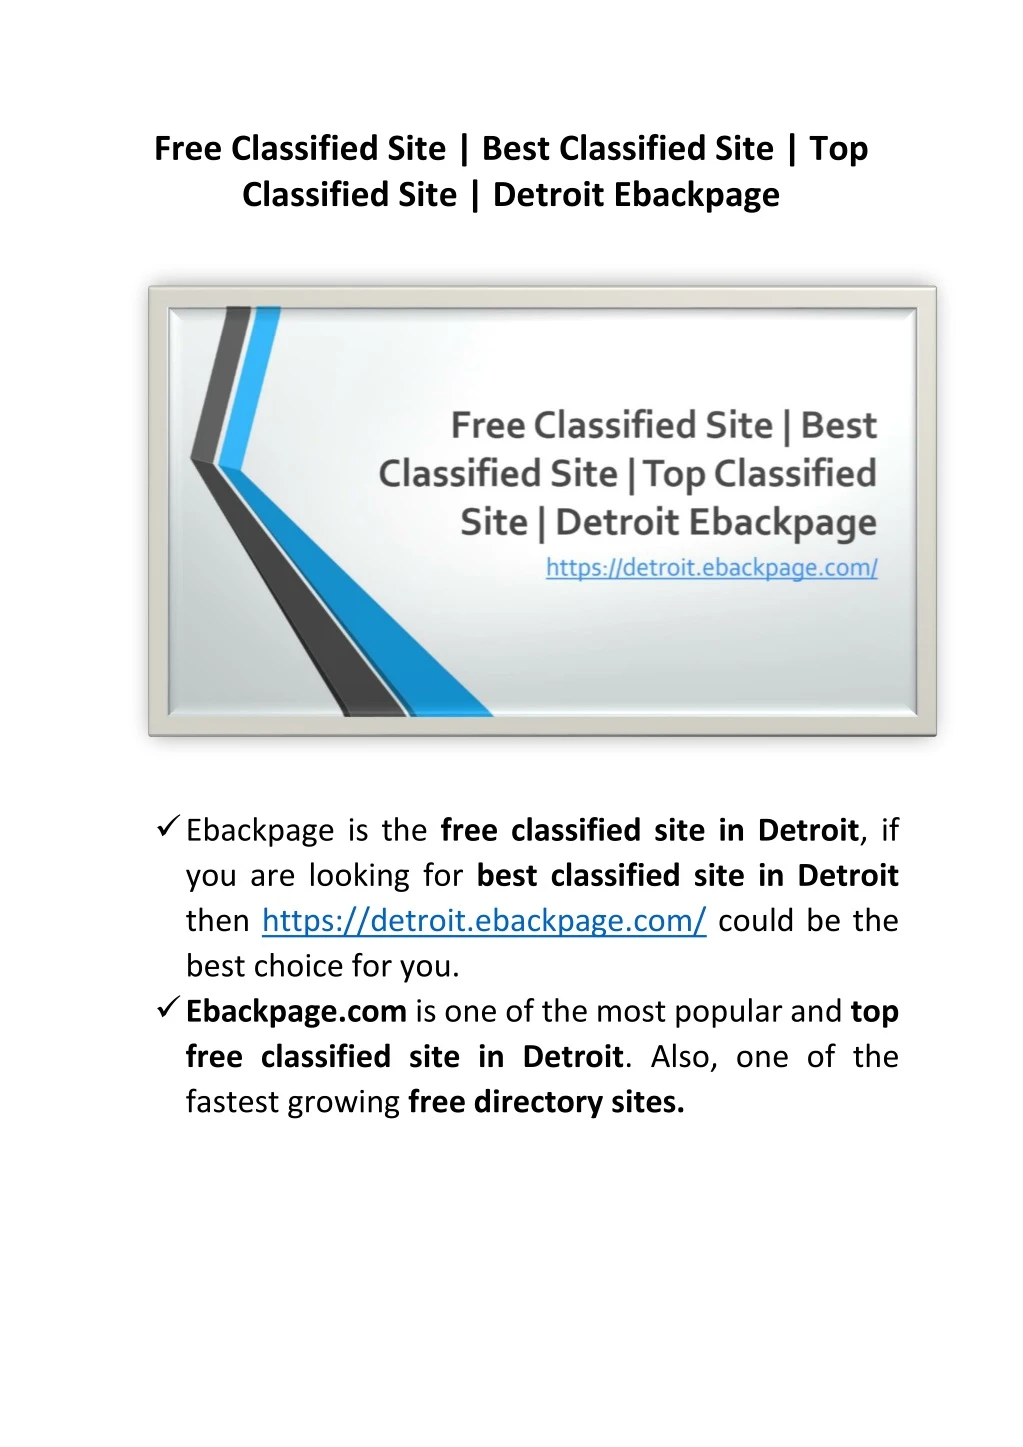 free classified site best classified site n.